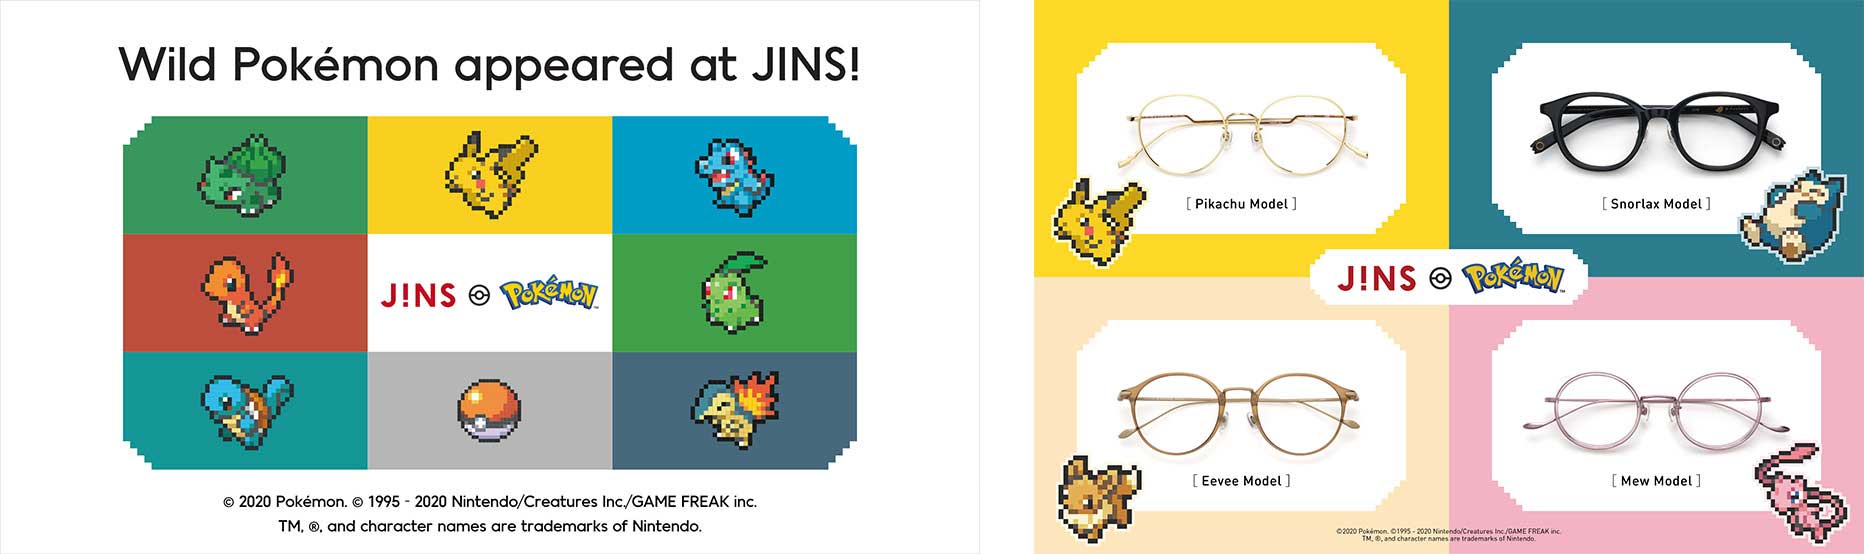 JINS Pokémon Model to be released on December 21, 2020